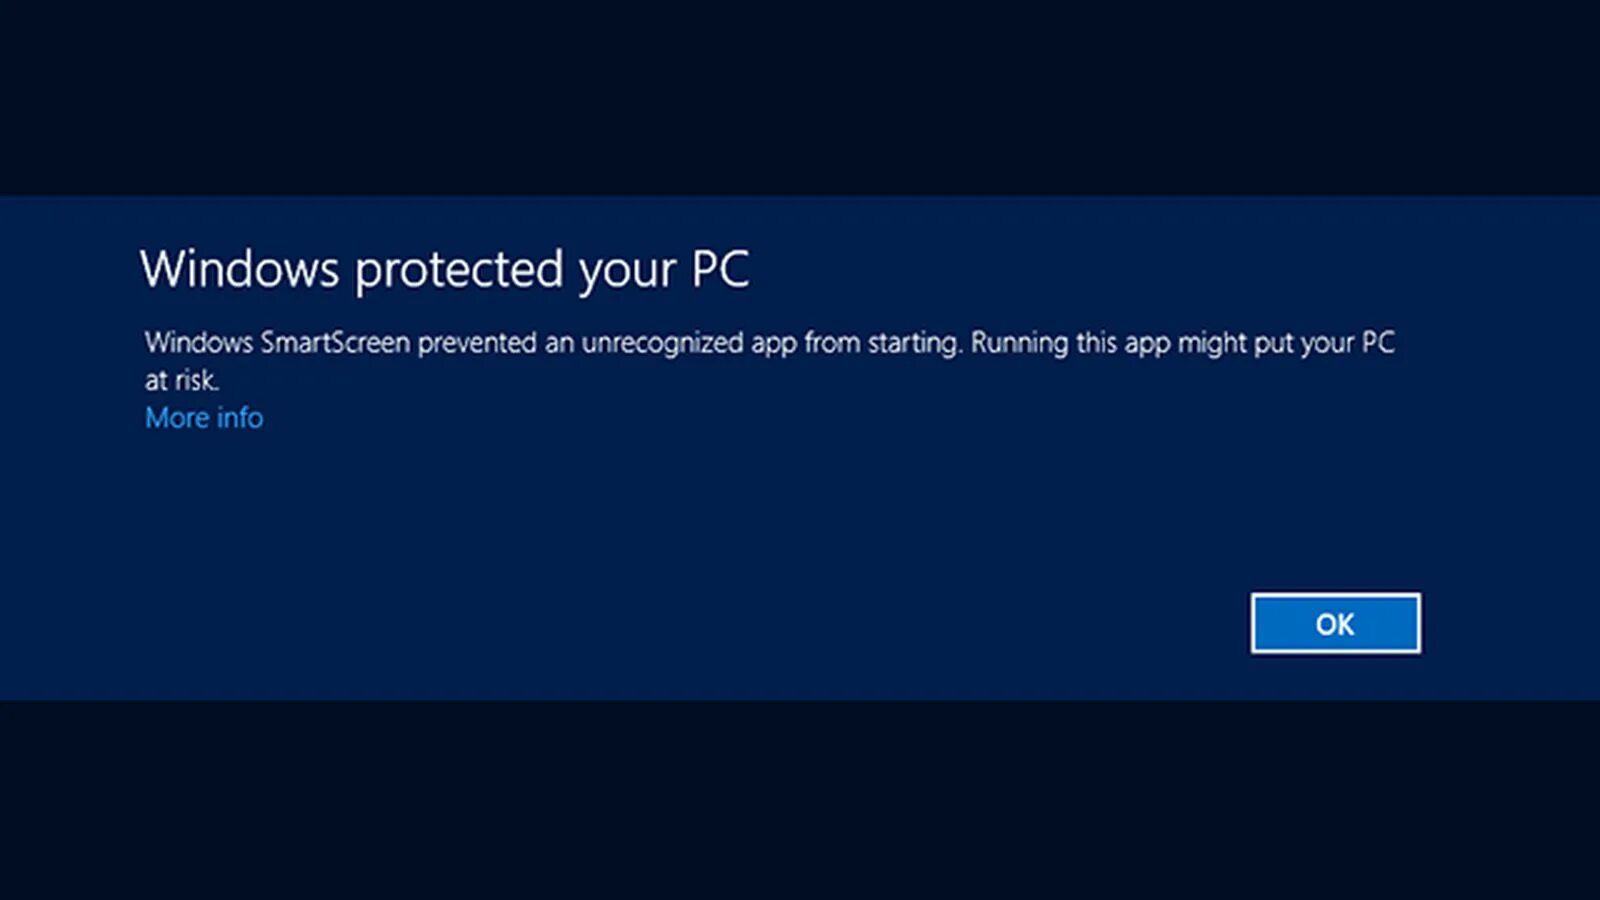 Window smartscreen. Windows SMARTSCREEN. Microsoft SMARTSCREEN. Windows protected. Windows protected your PC.